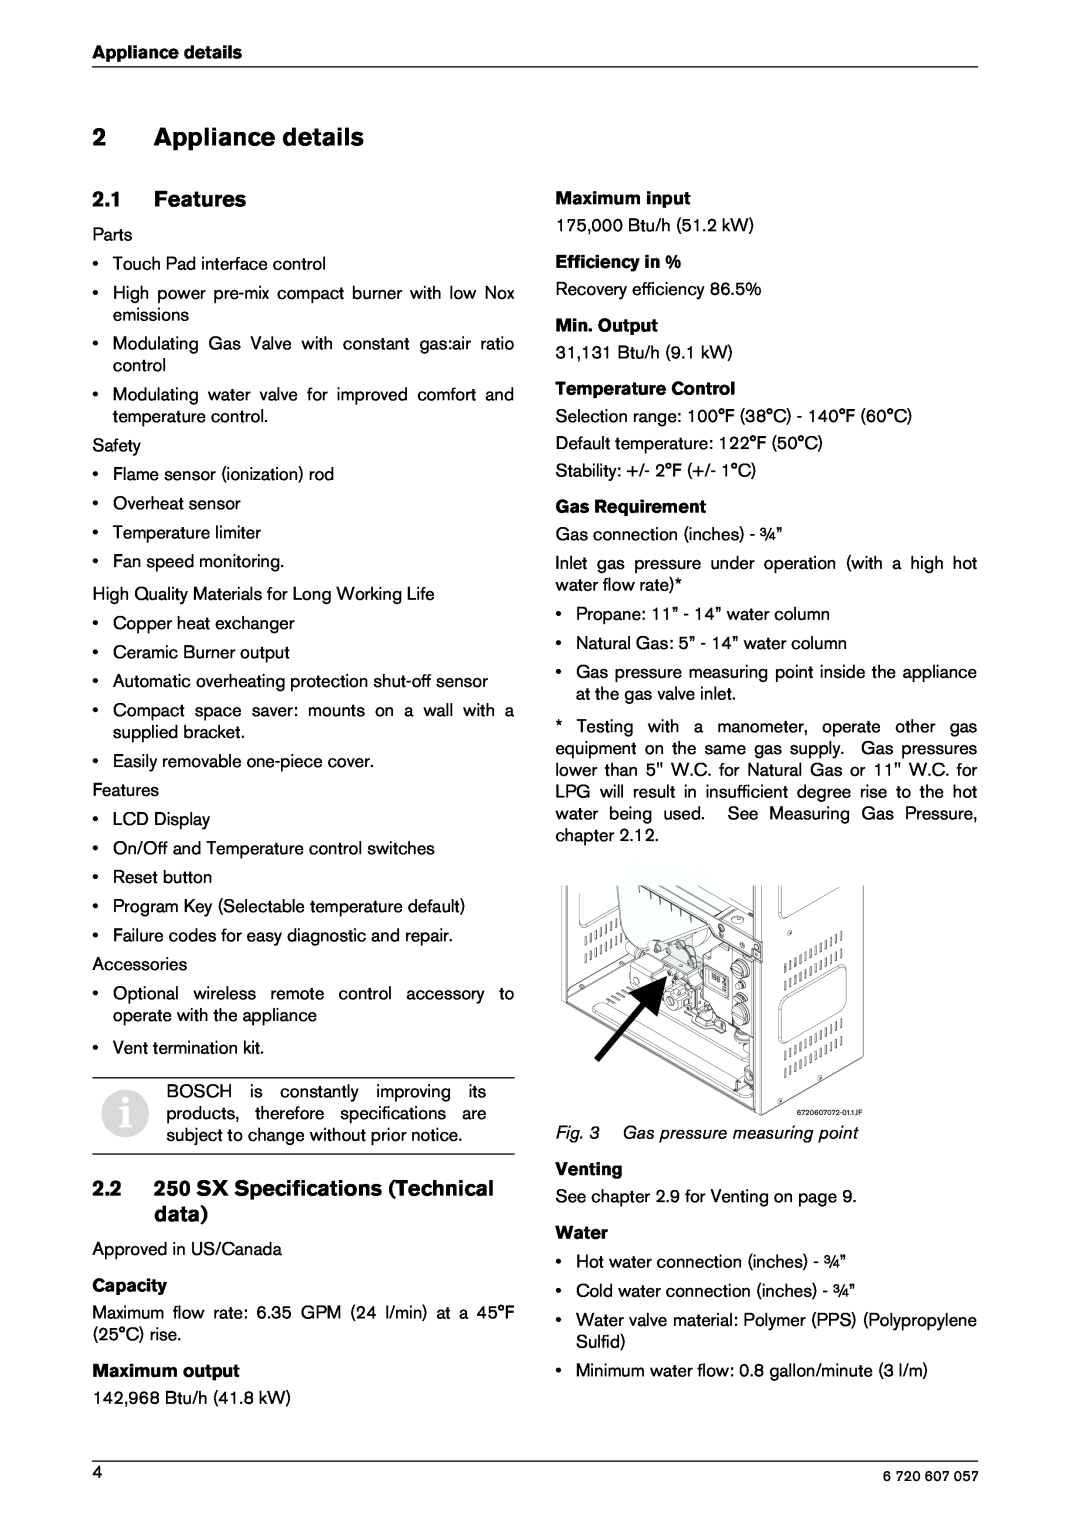 Bosch Appliances 250SX LP, 250SX NG manual Appliance details, Features, 2.2 250 SX Specifications Technical data 